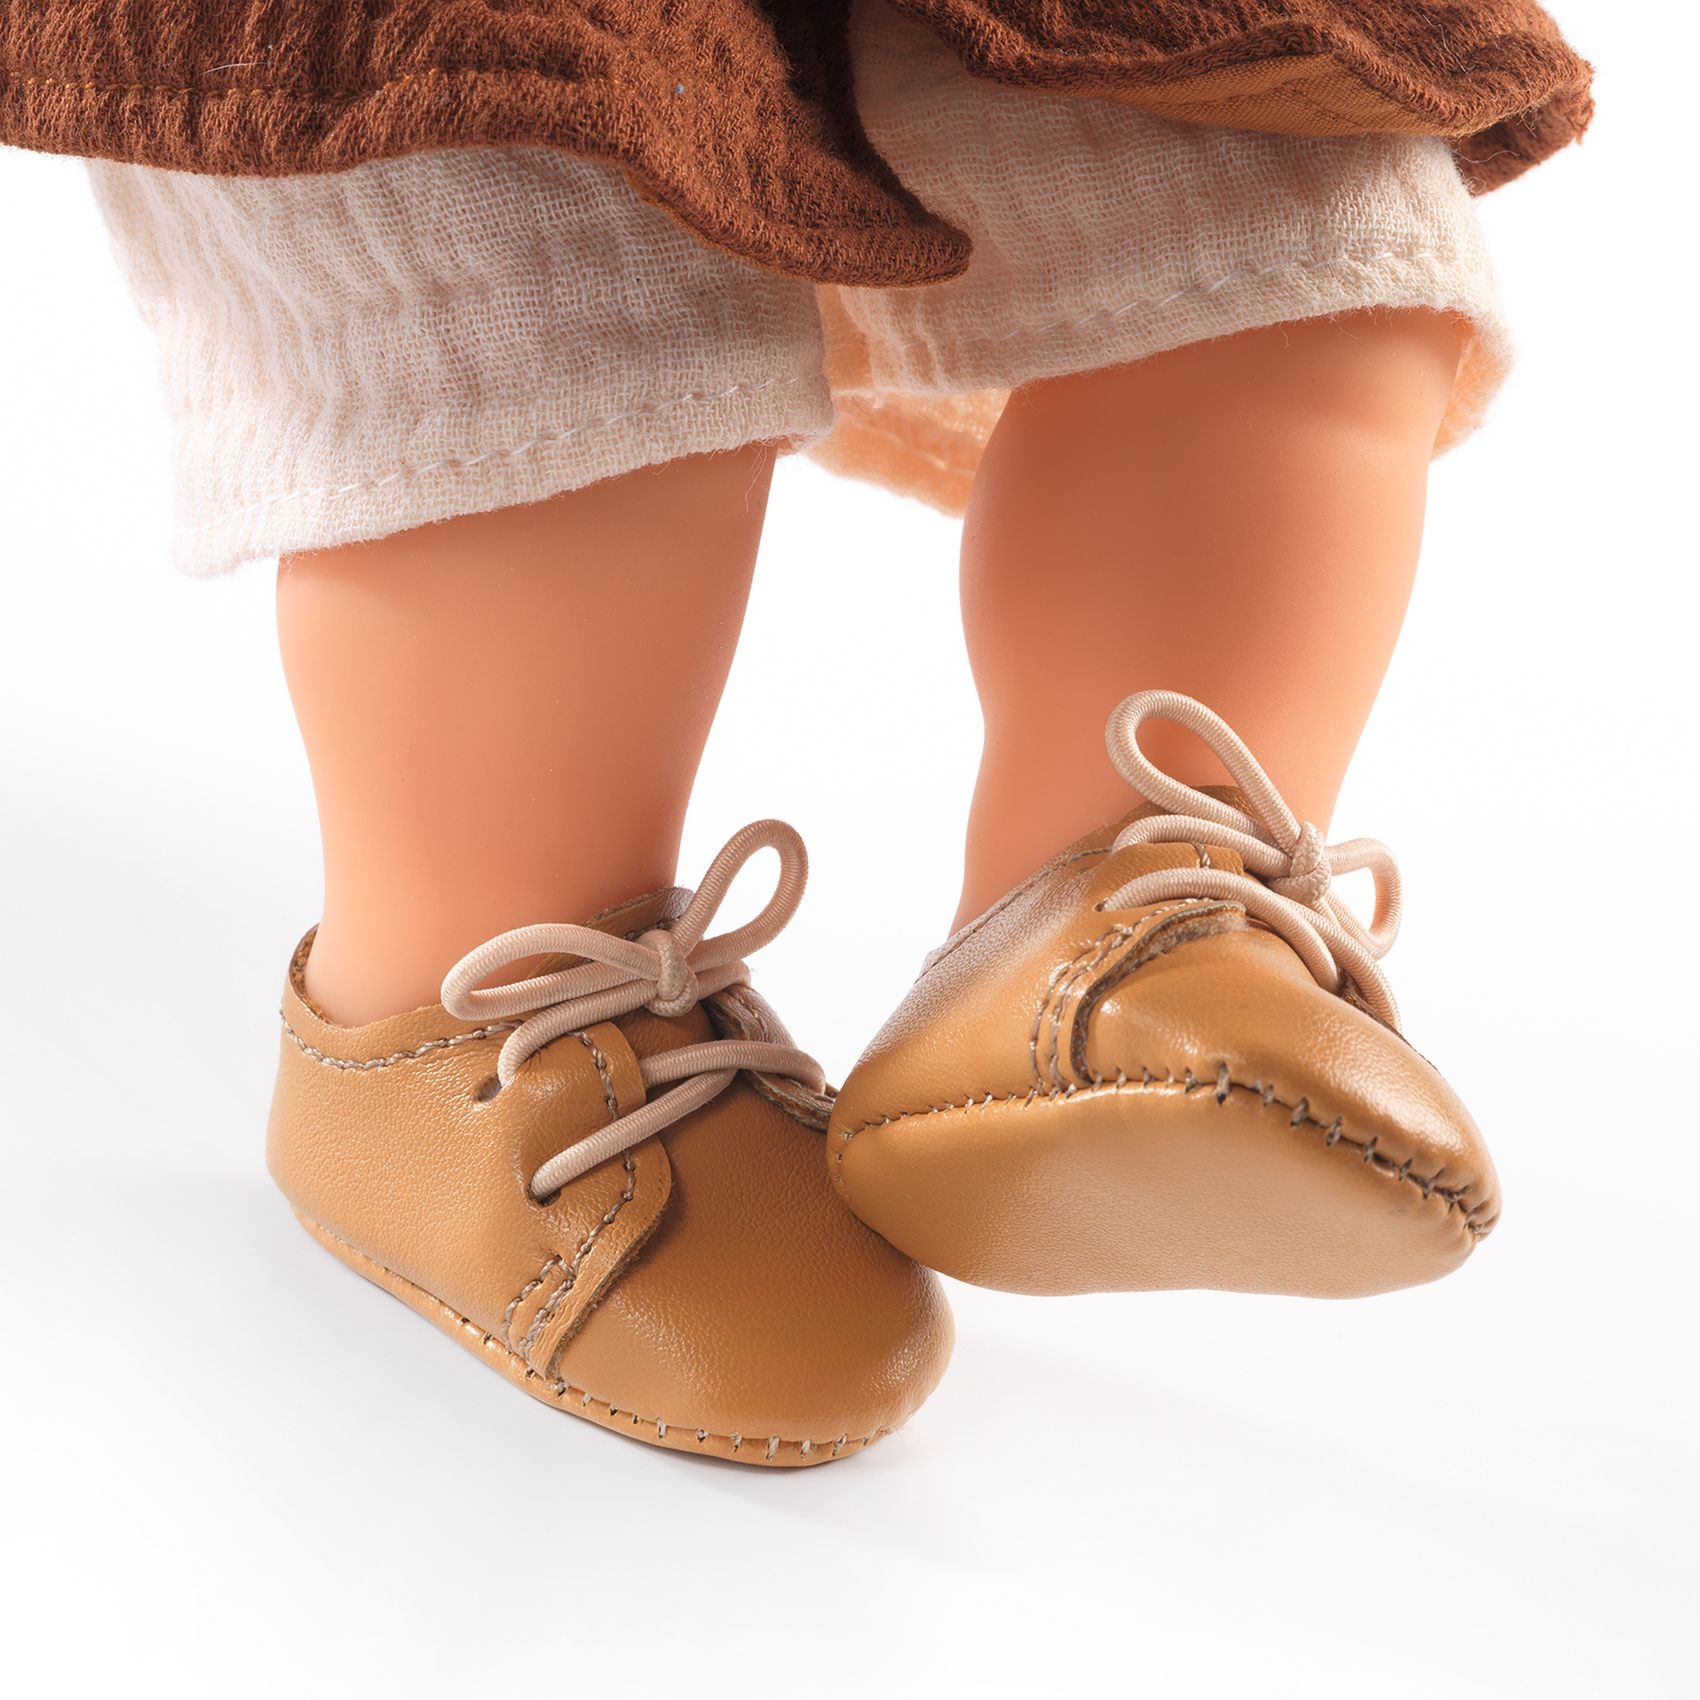 Játékbaba cipő - Barna cipőcske - Brown shoes - 2